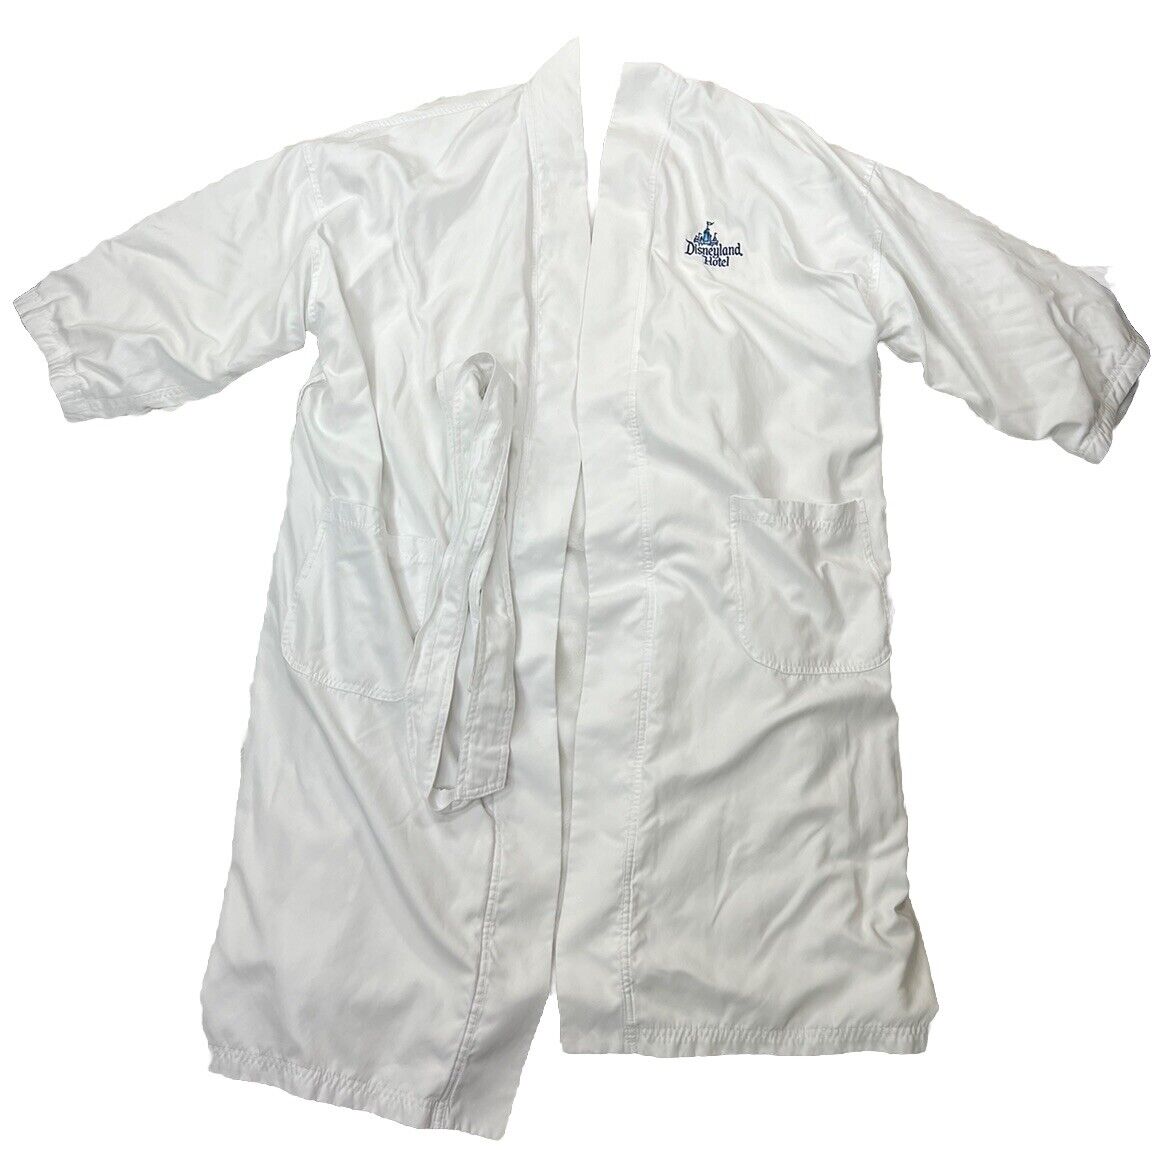 Disneyland Hotel White Bath Robe Fleece Line Great Condition Size L/XL Luxury